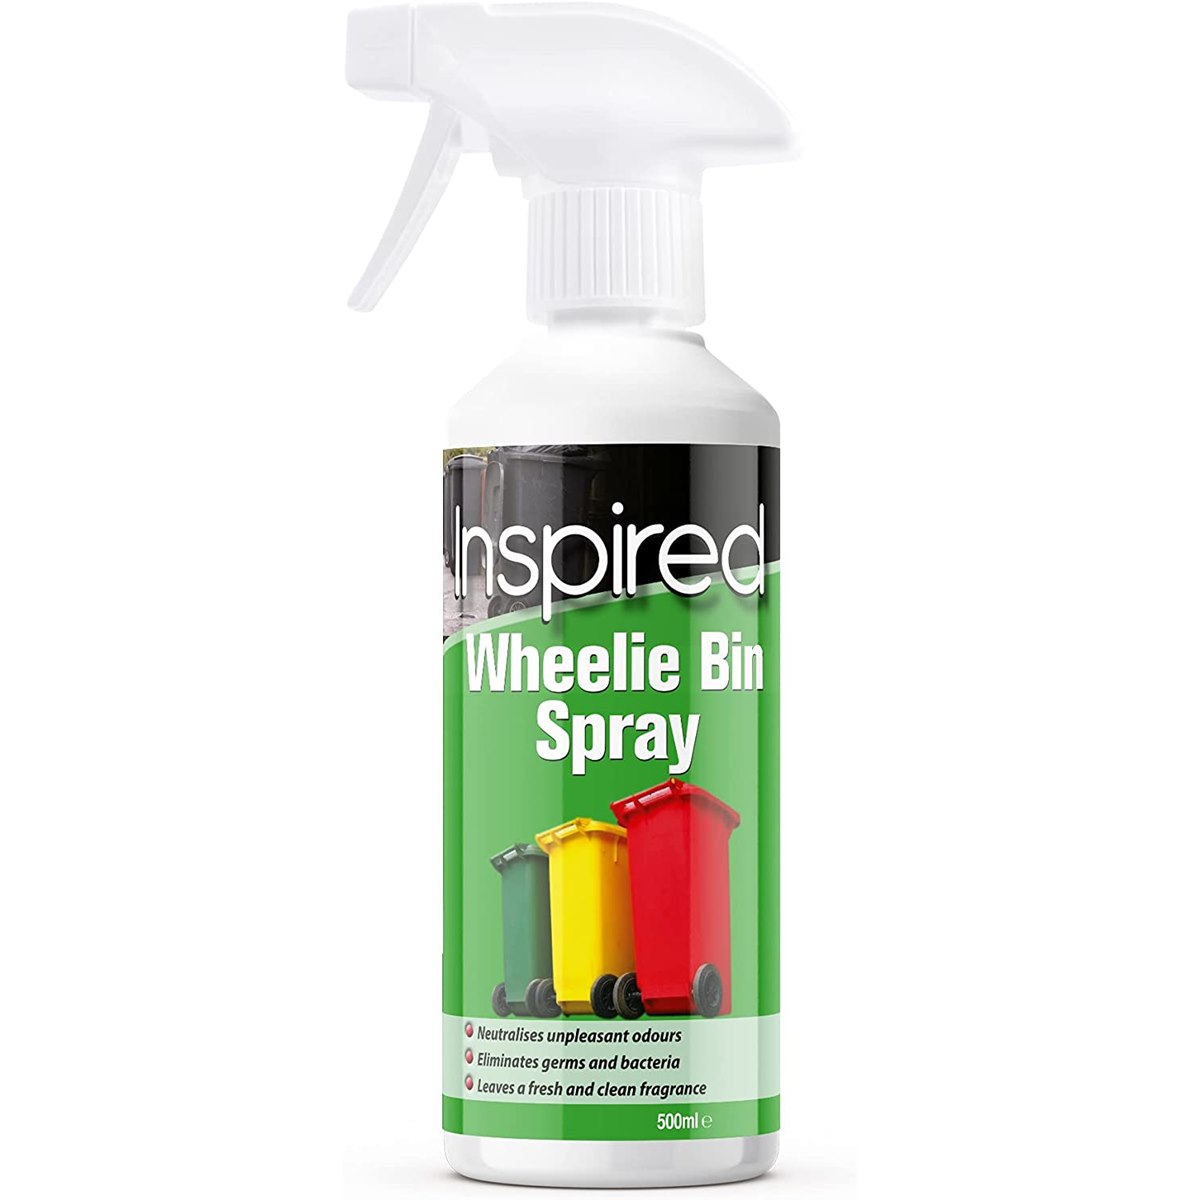 Inspired (Wheelie) Dustbin Cleaner Spray 500ml